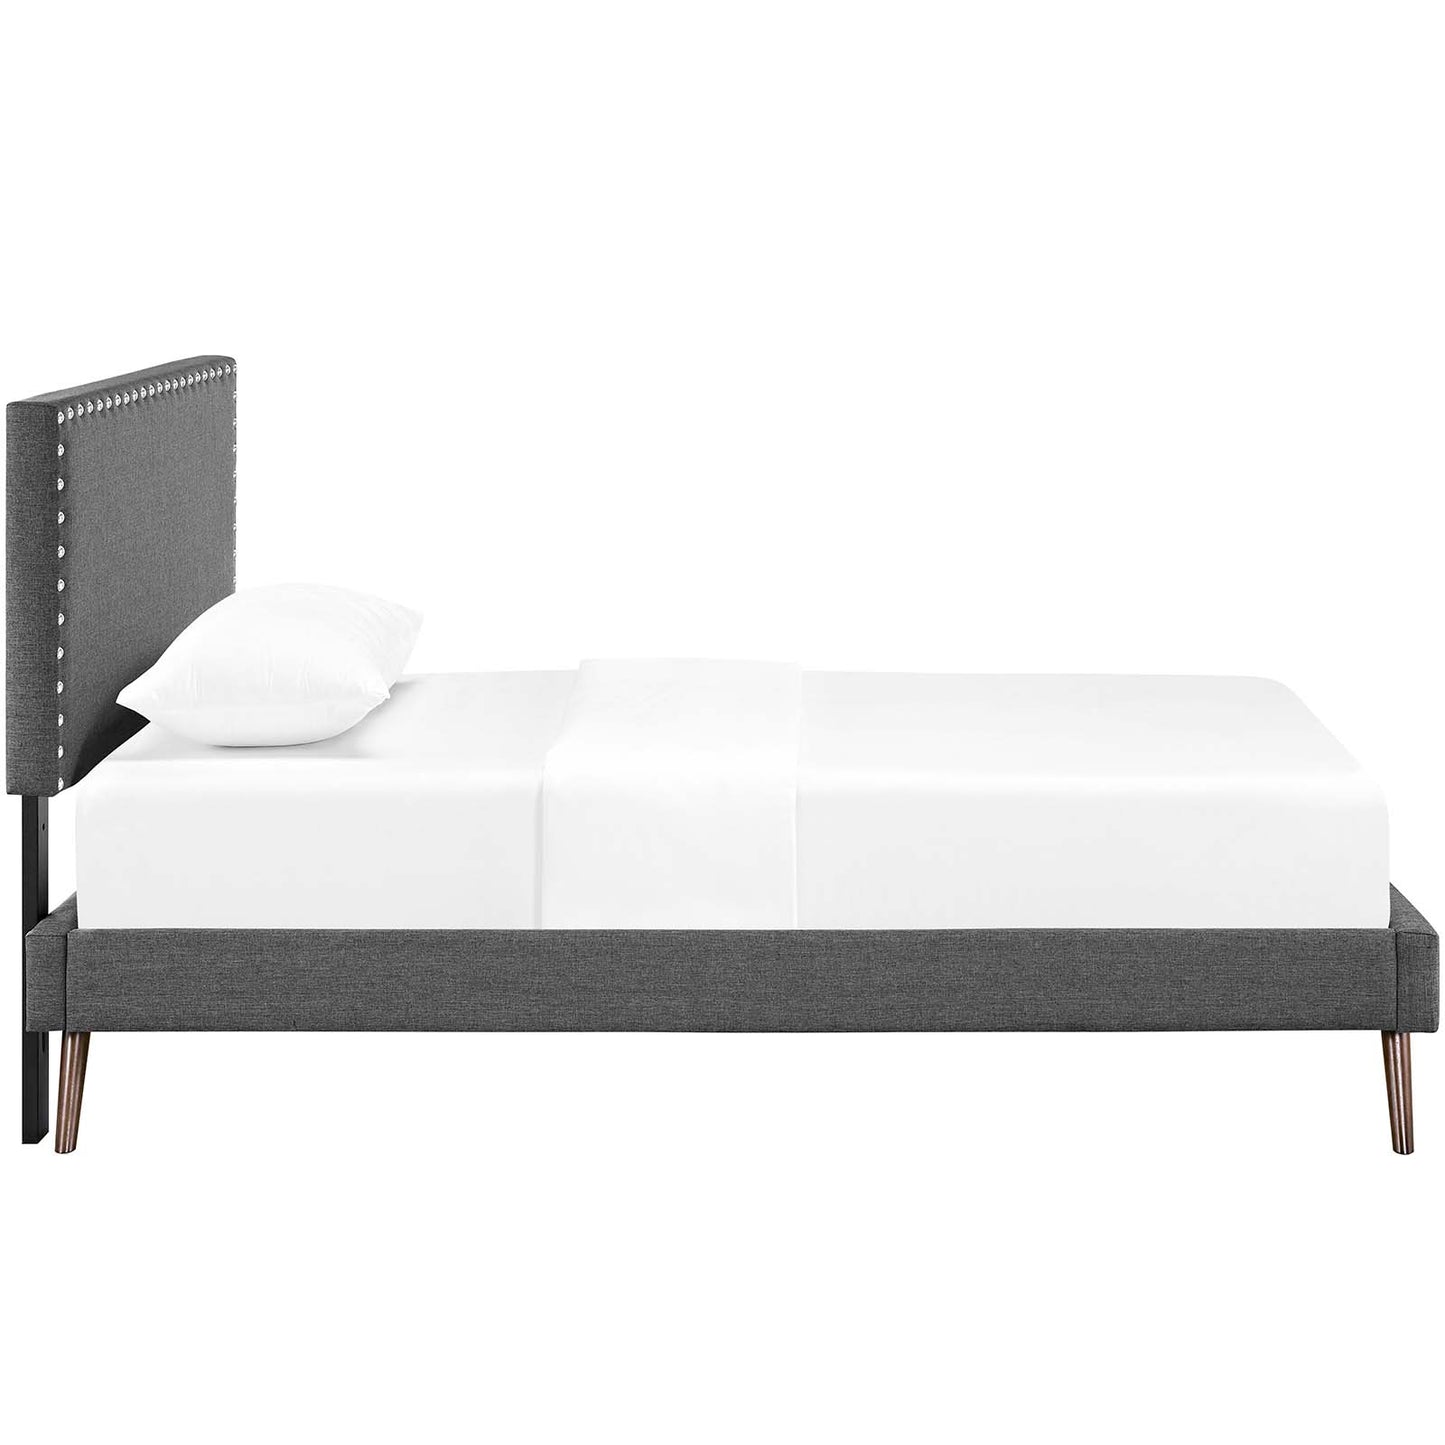 Macie Twin Fabric Platform Bed with Round Splayed Legs Gray MOD-5959-GRY